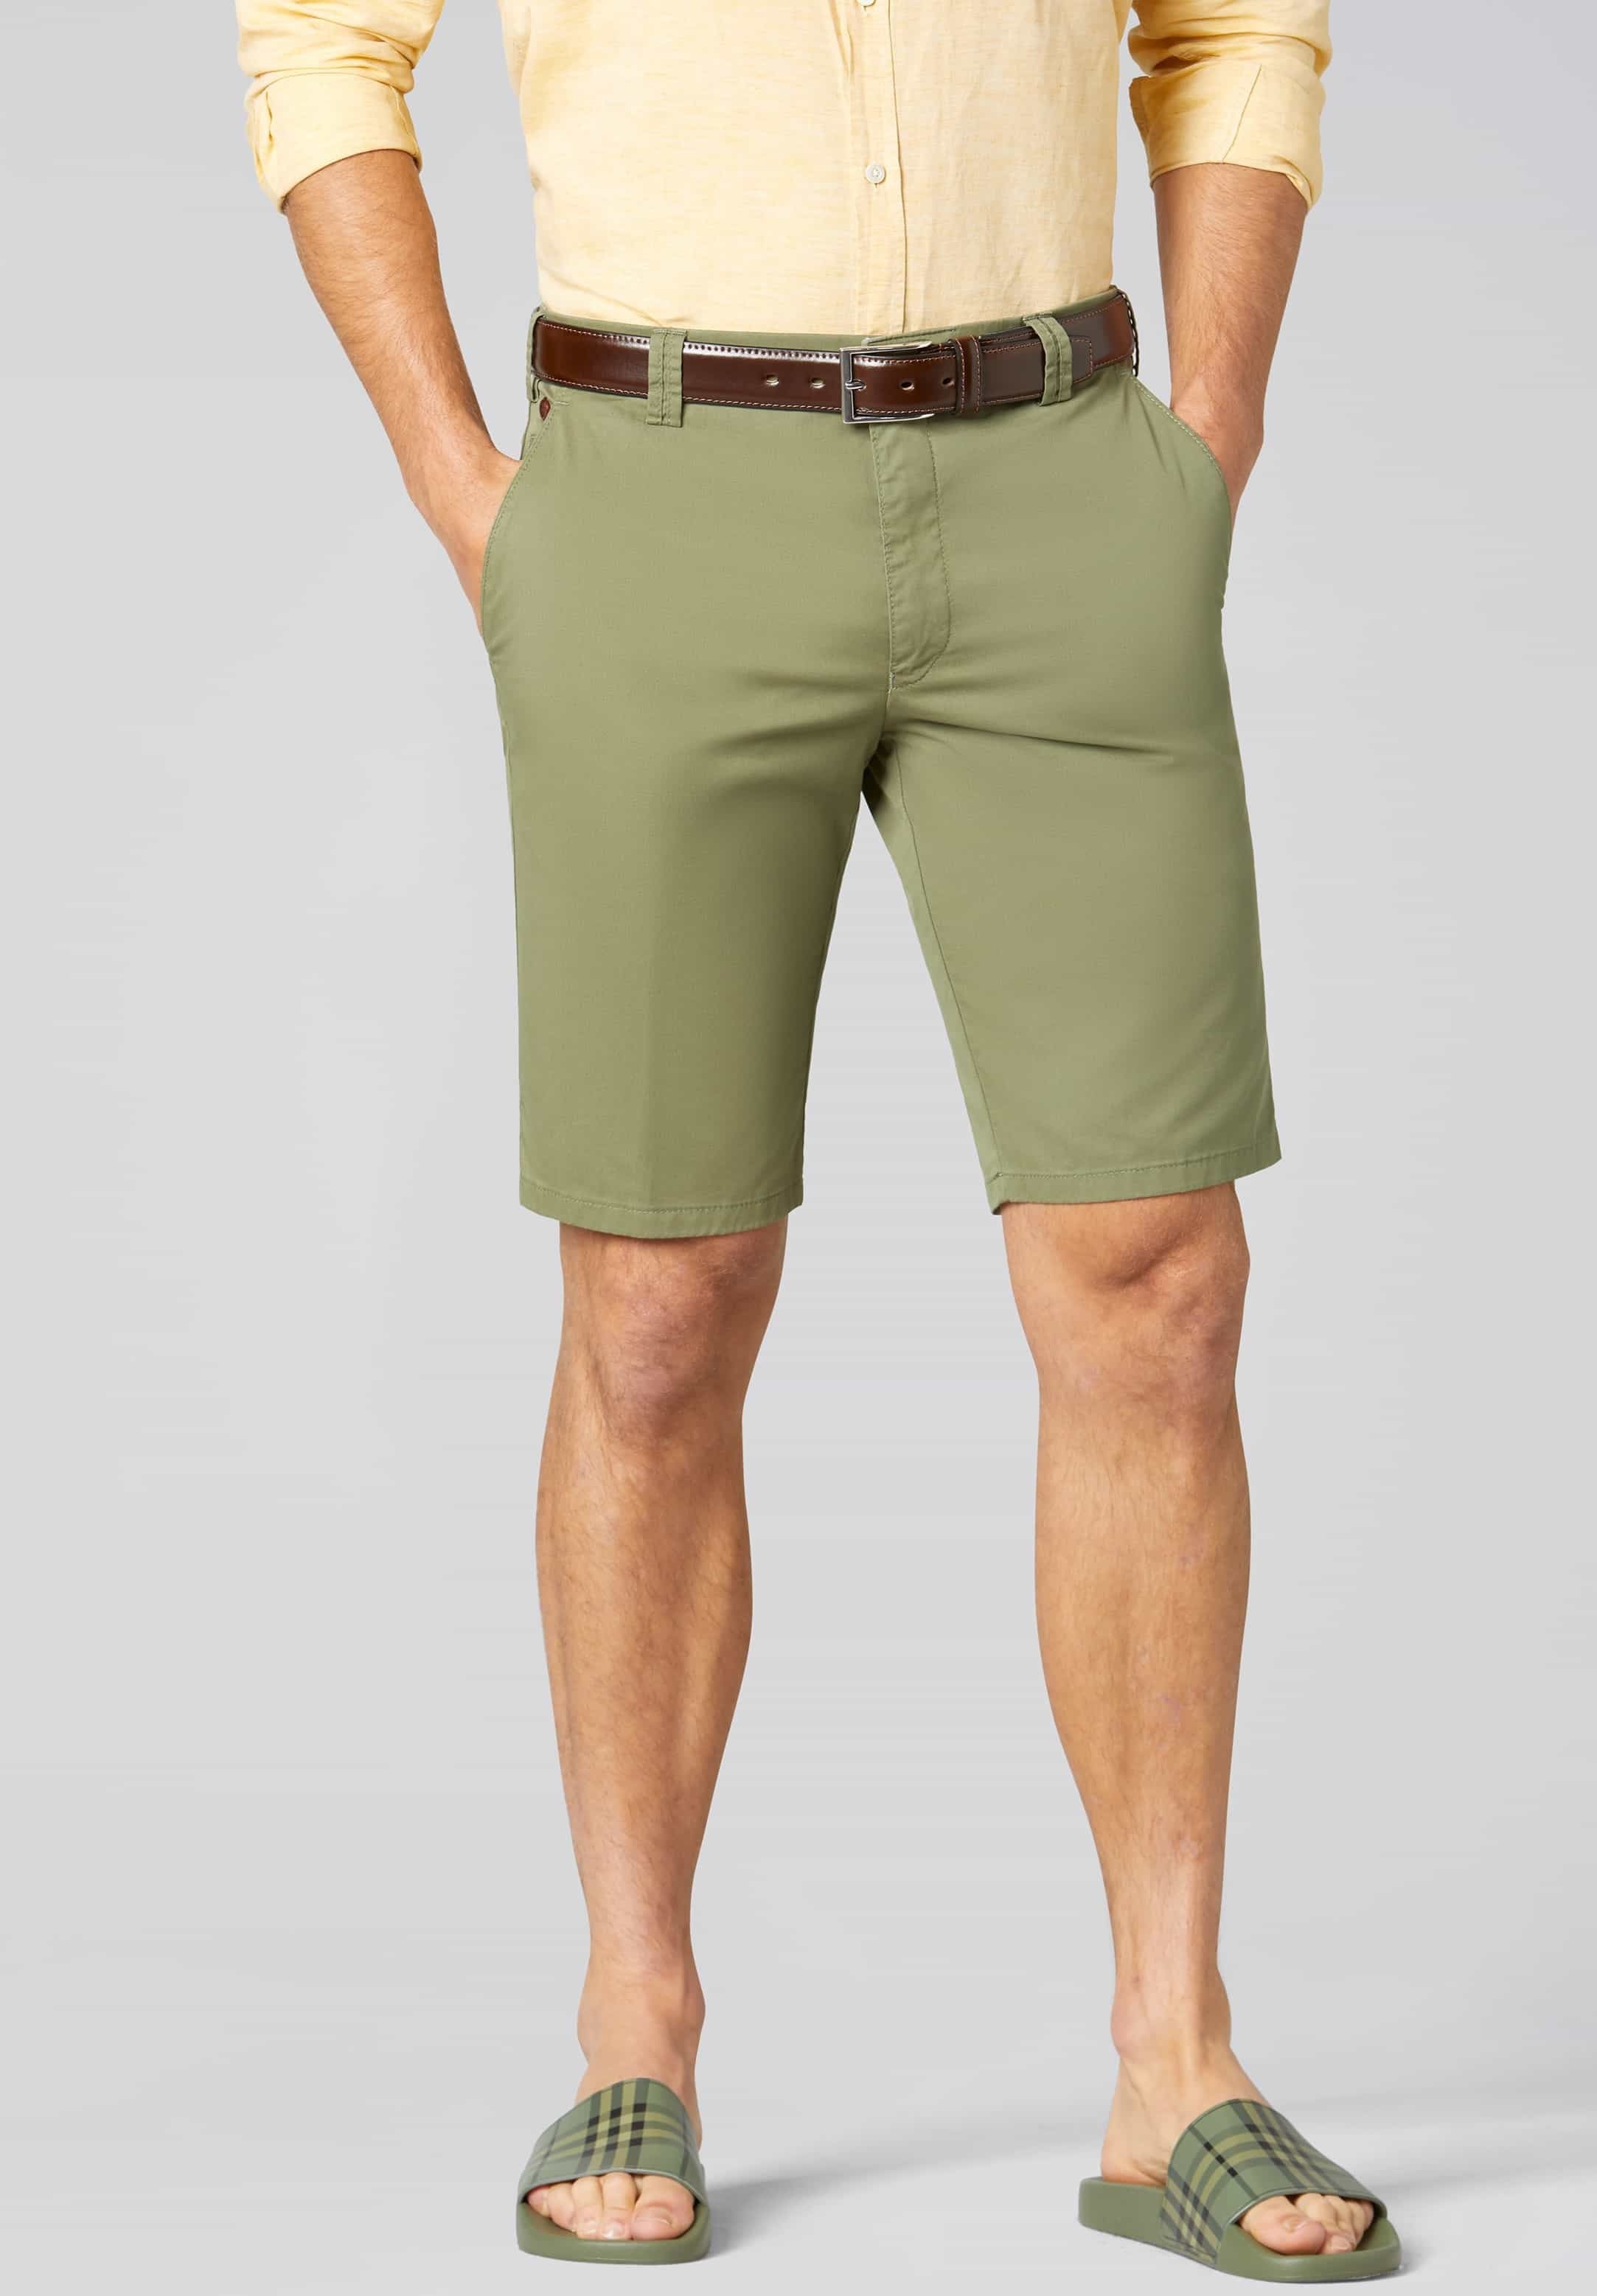 MEYER B-Palma Shorts - Men's Cotton Twill - Green